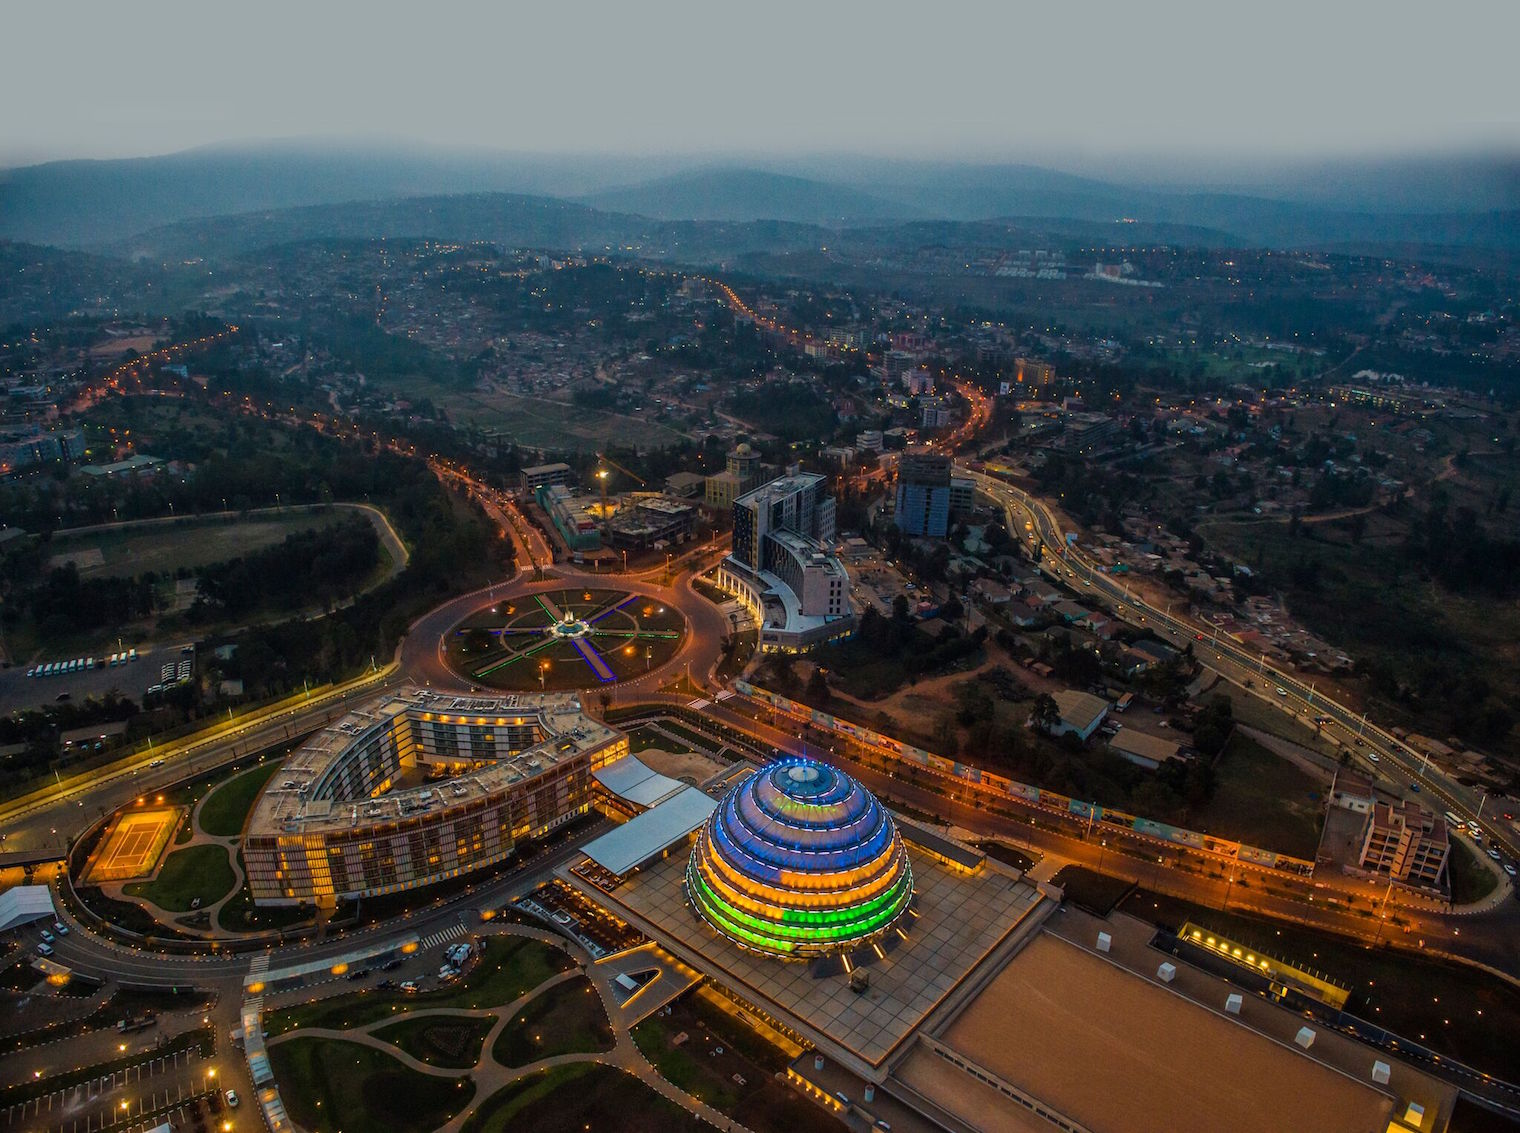 Kigali ariel scene